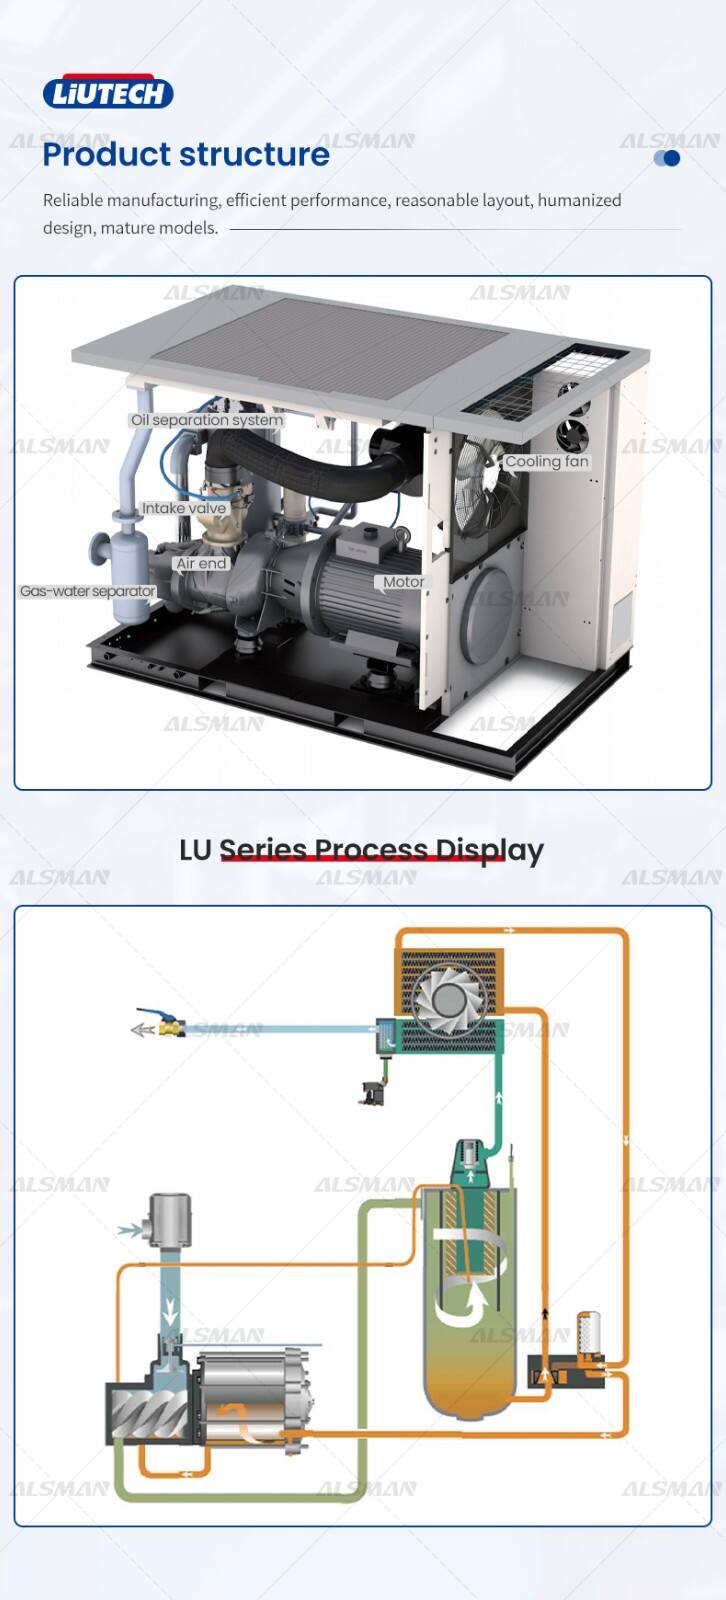 Liutech LU55PM Plus Ultra Efficient Permanent Magnet Variable Frequency Air Compressor details